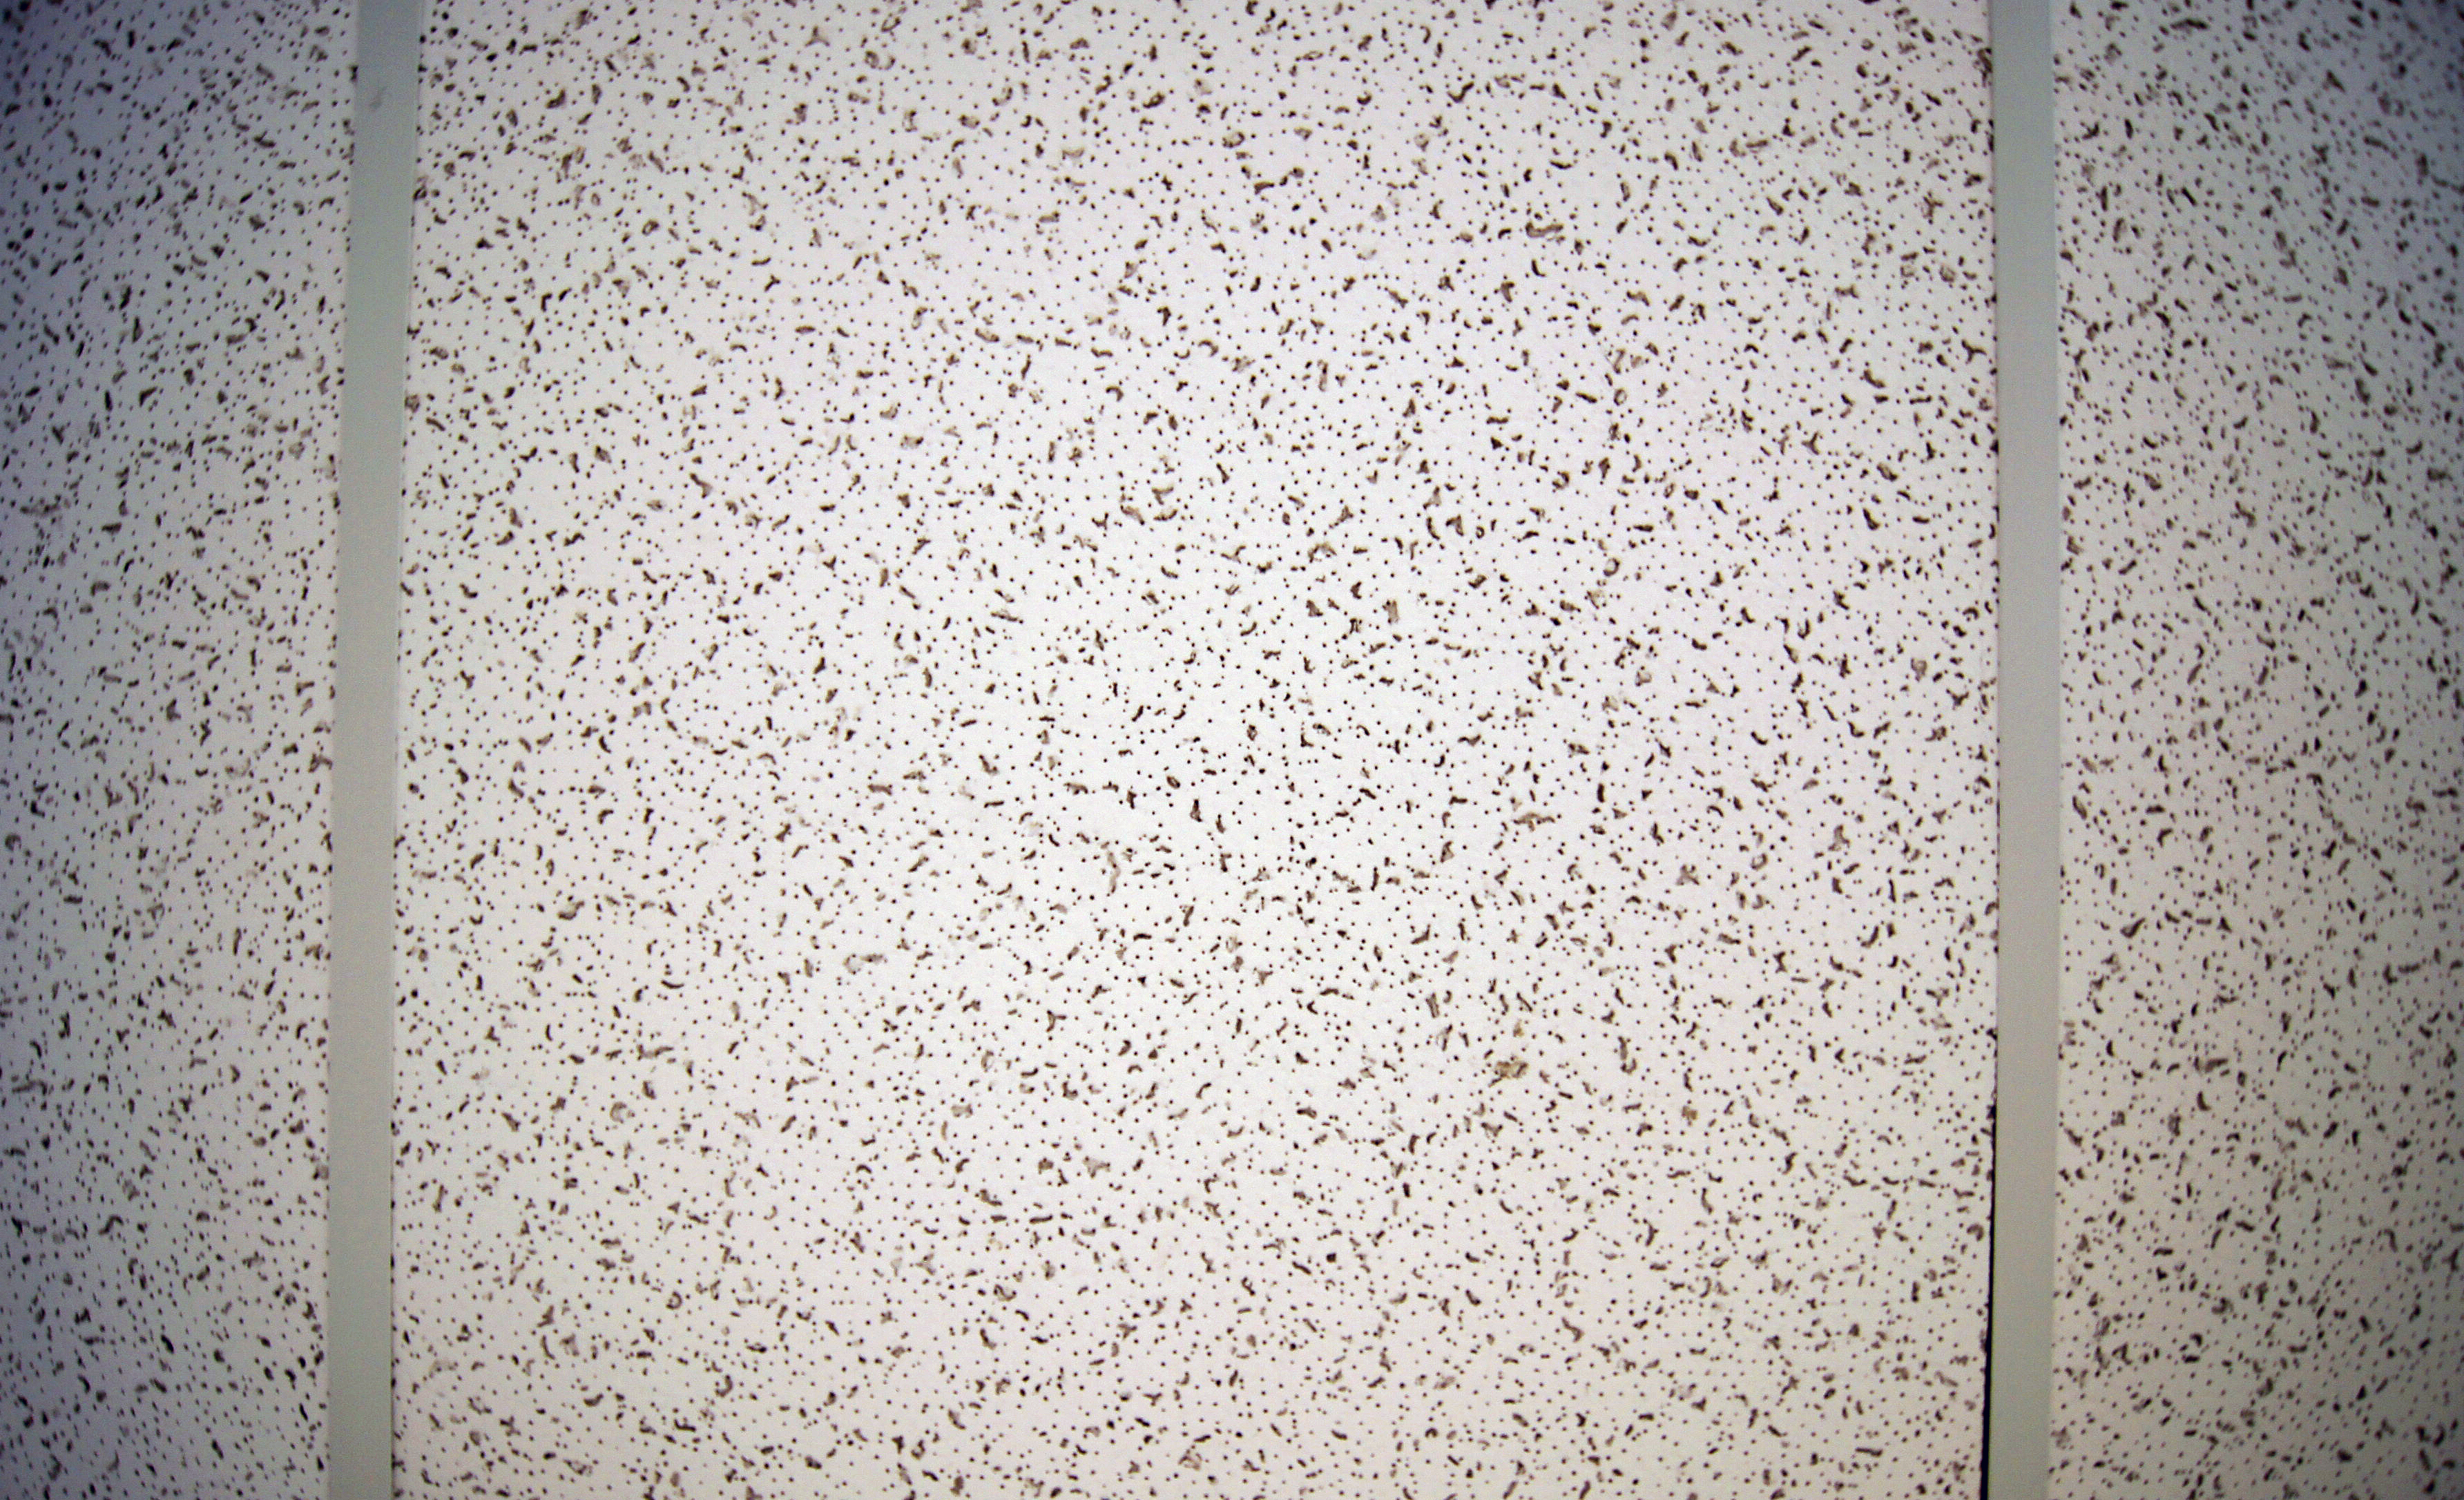 False Ceiling Tile Texture By Bugworlds On Deviantart